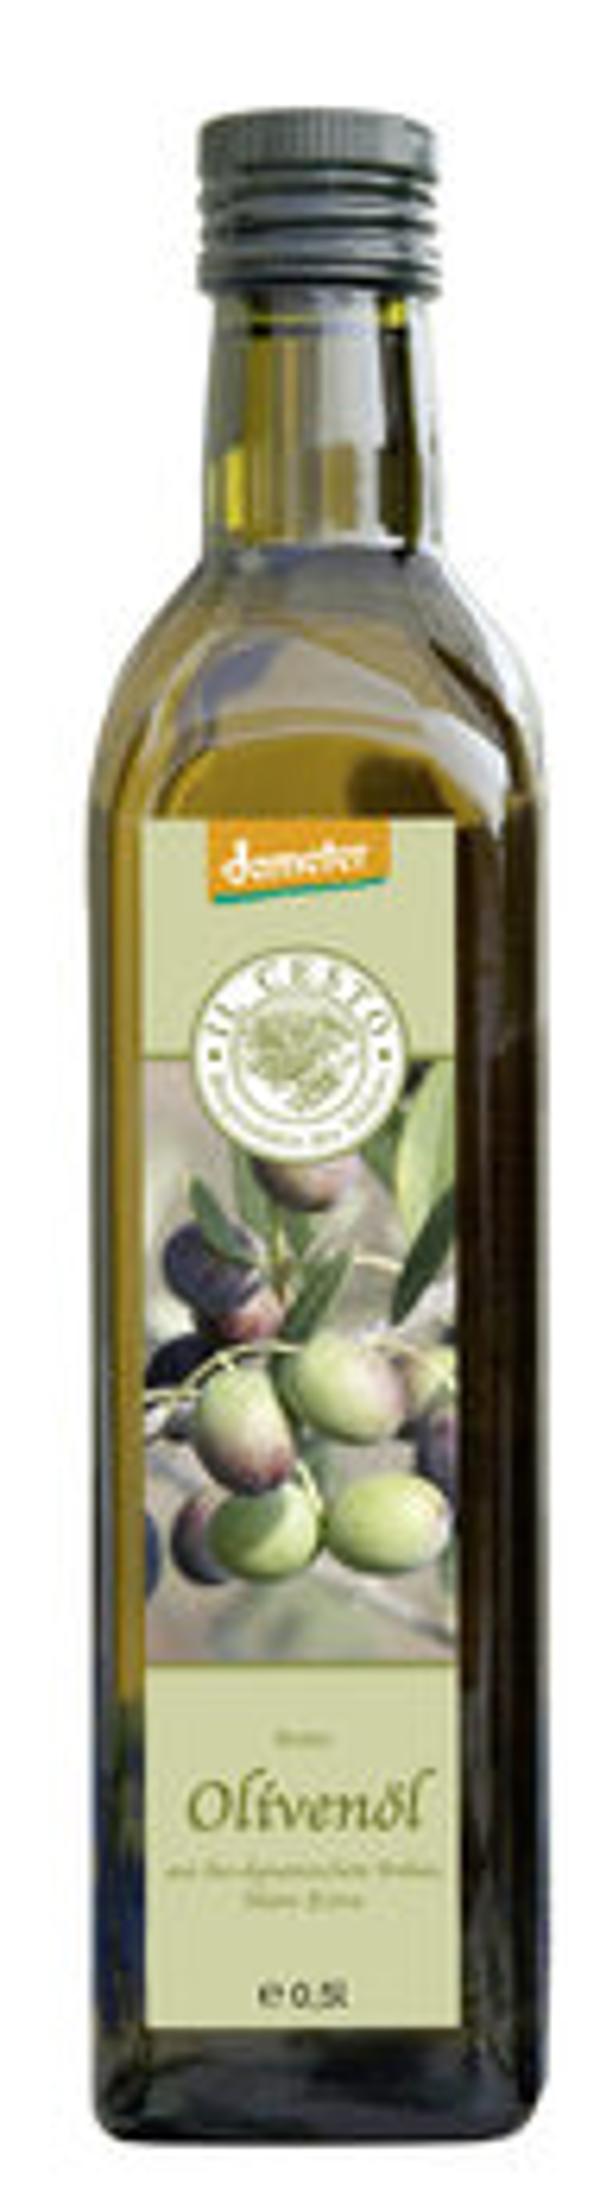 Produktfoto zu Olivenöl Nativ Extra, Demeter